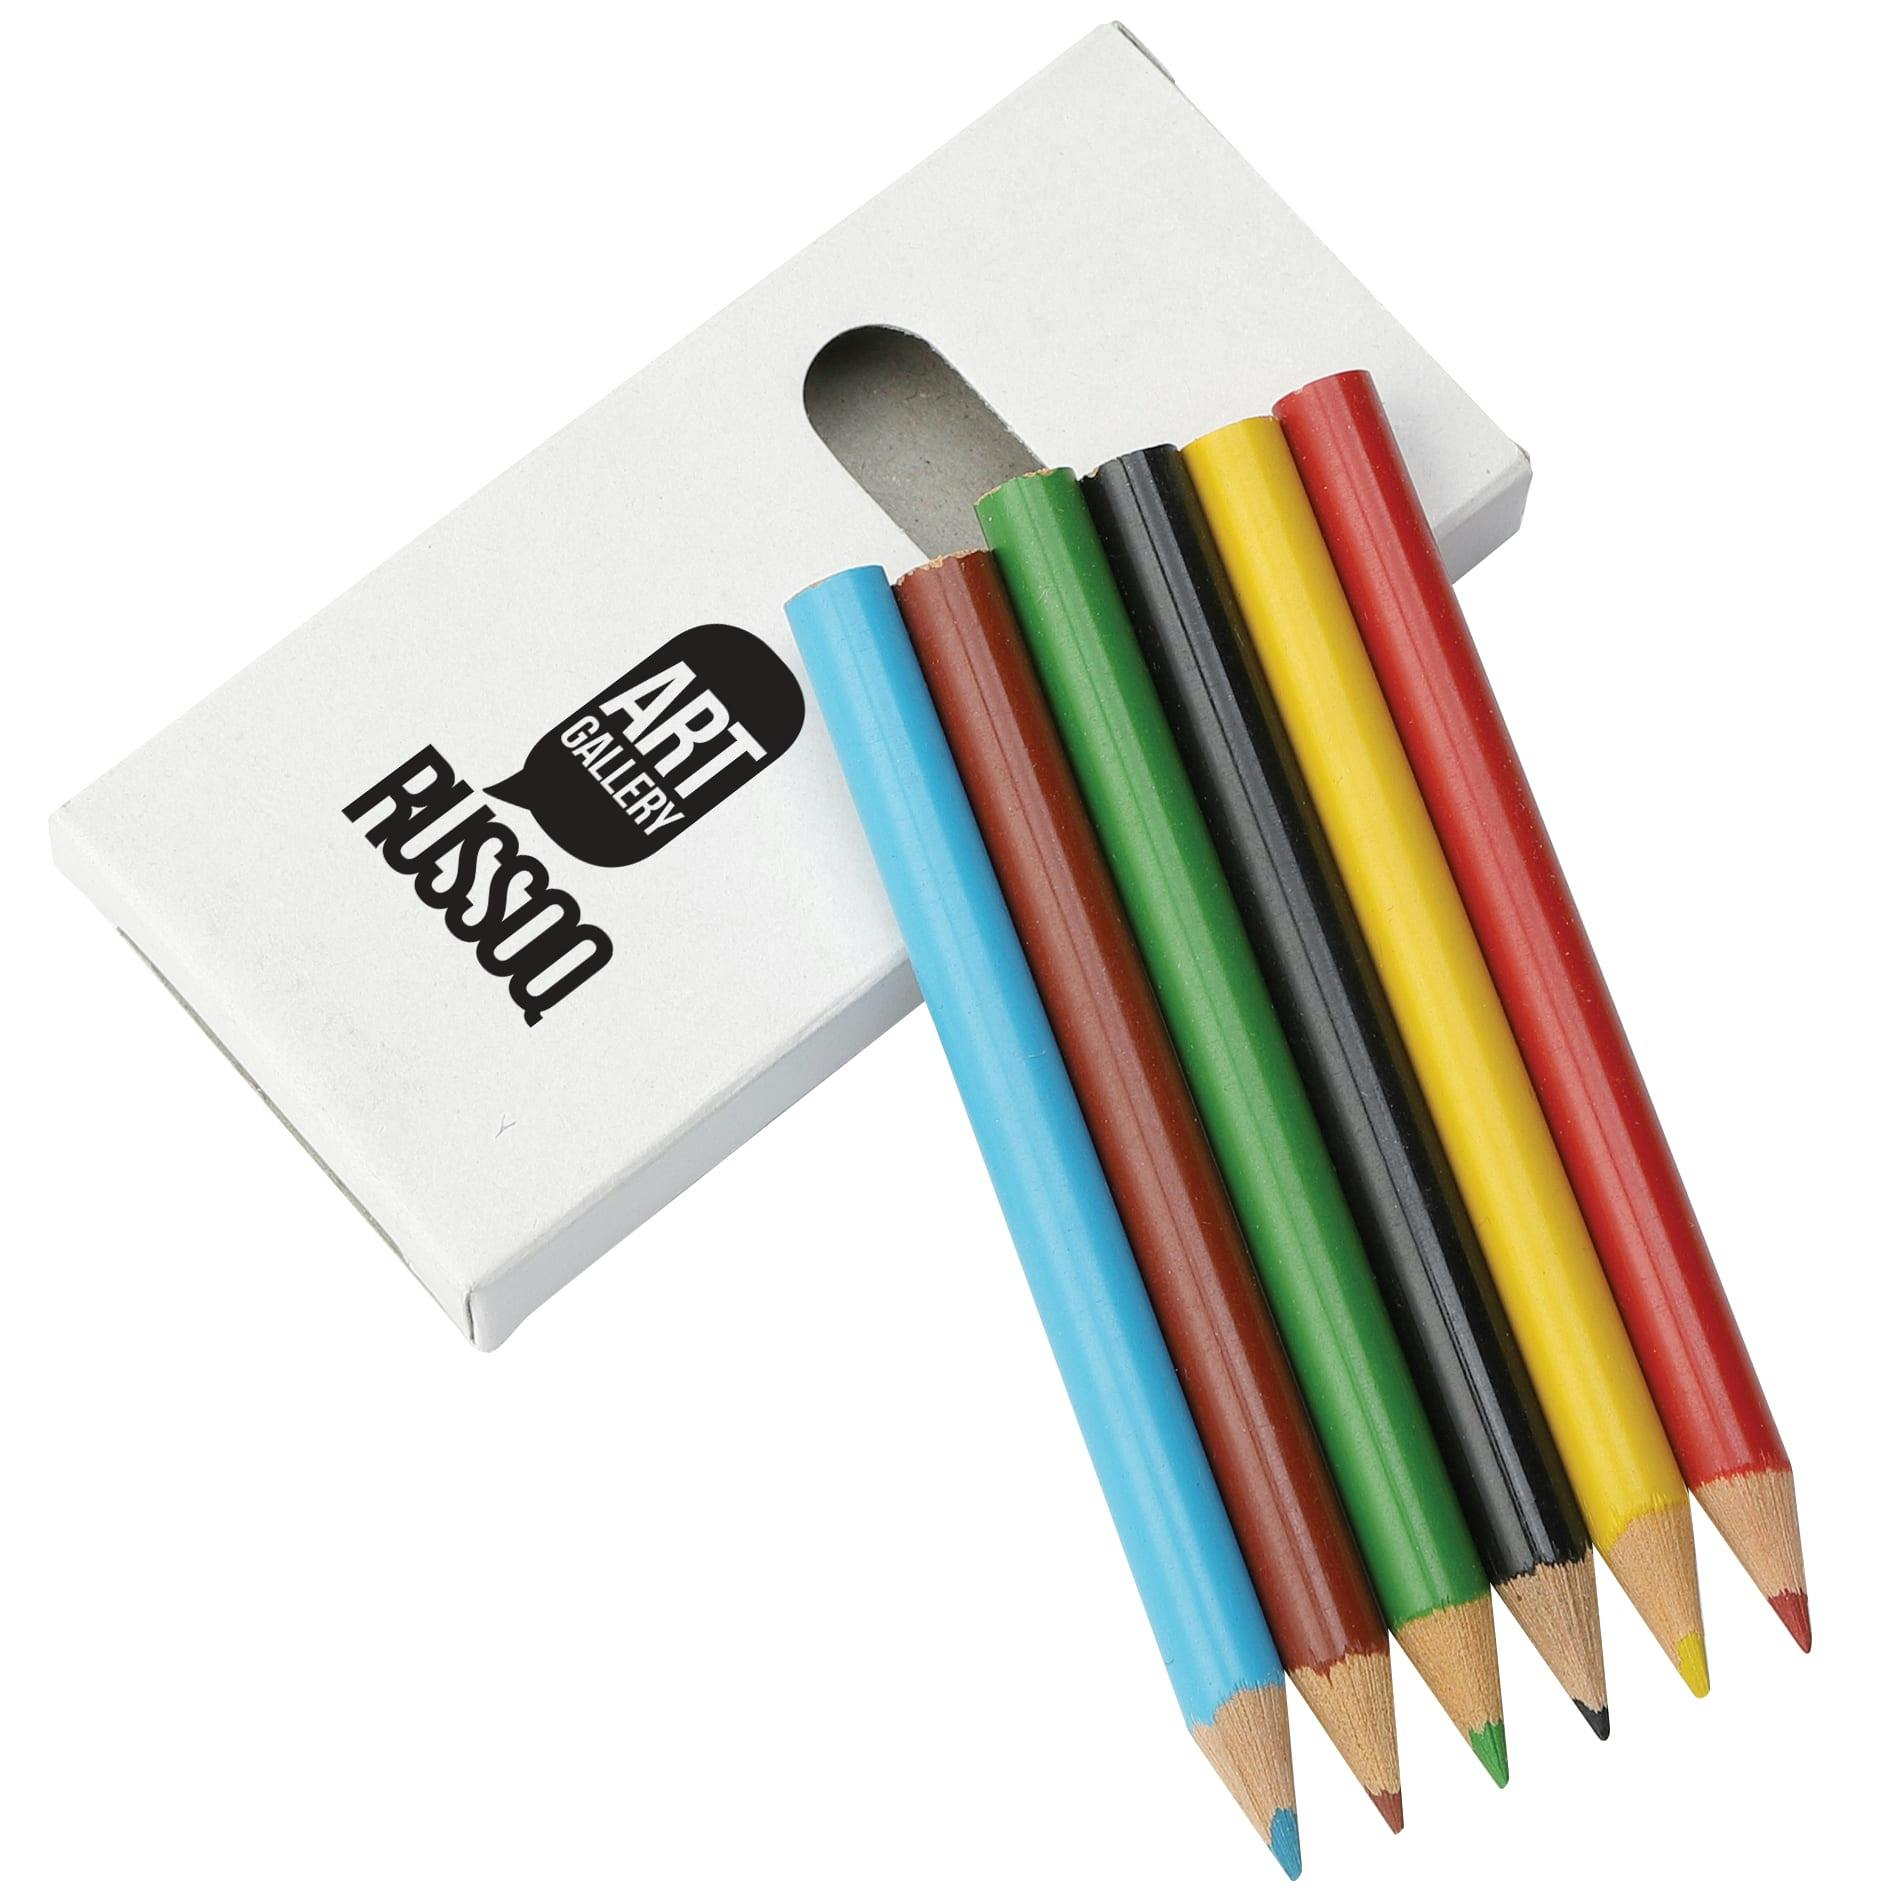 Sketchi 6-Piece Colored Pencil Set - additional Image 5